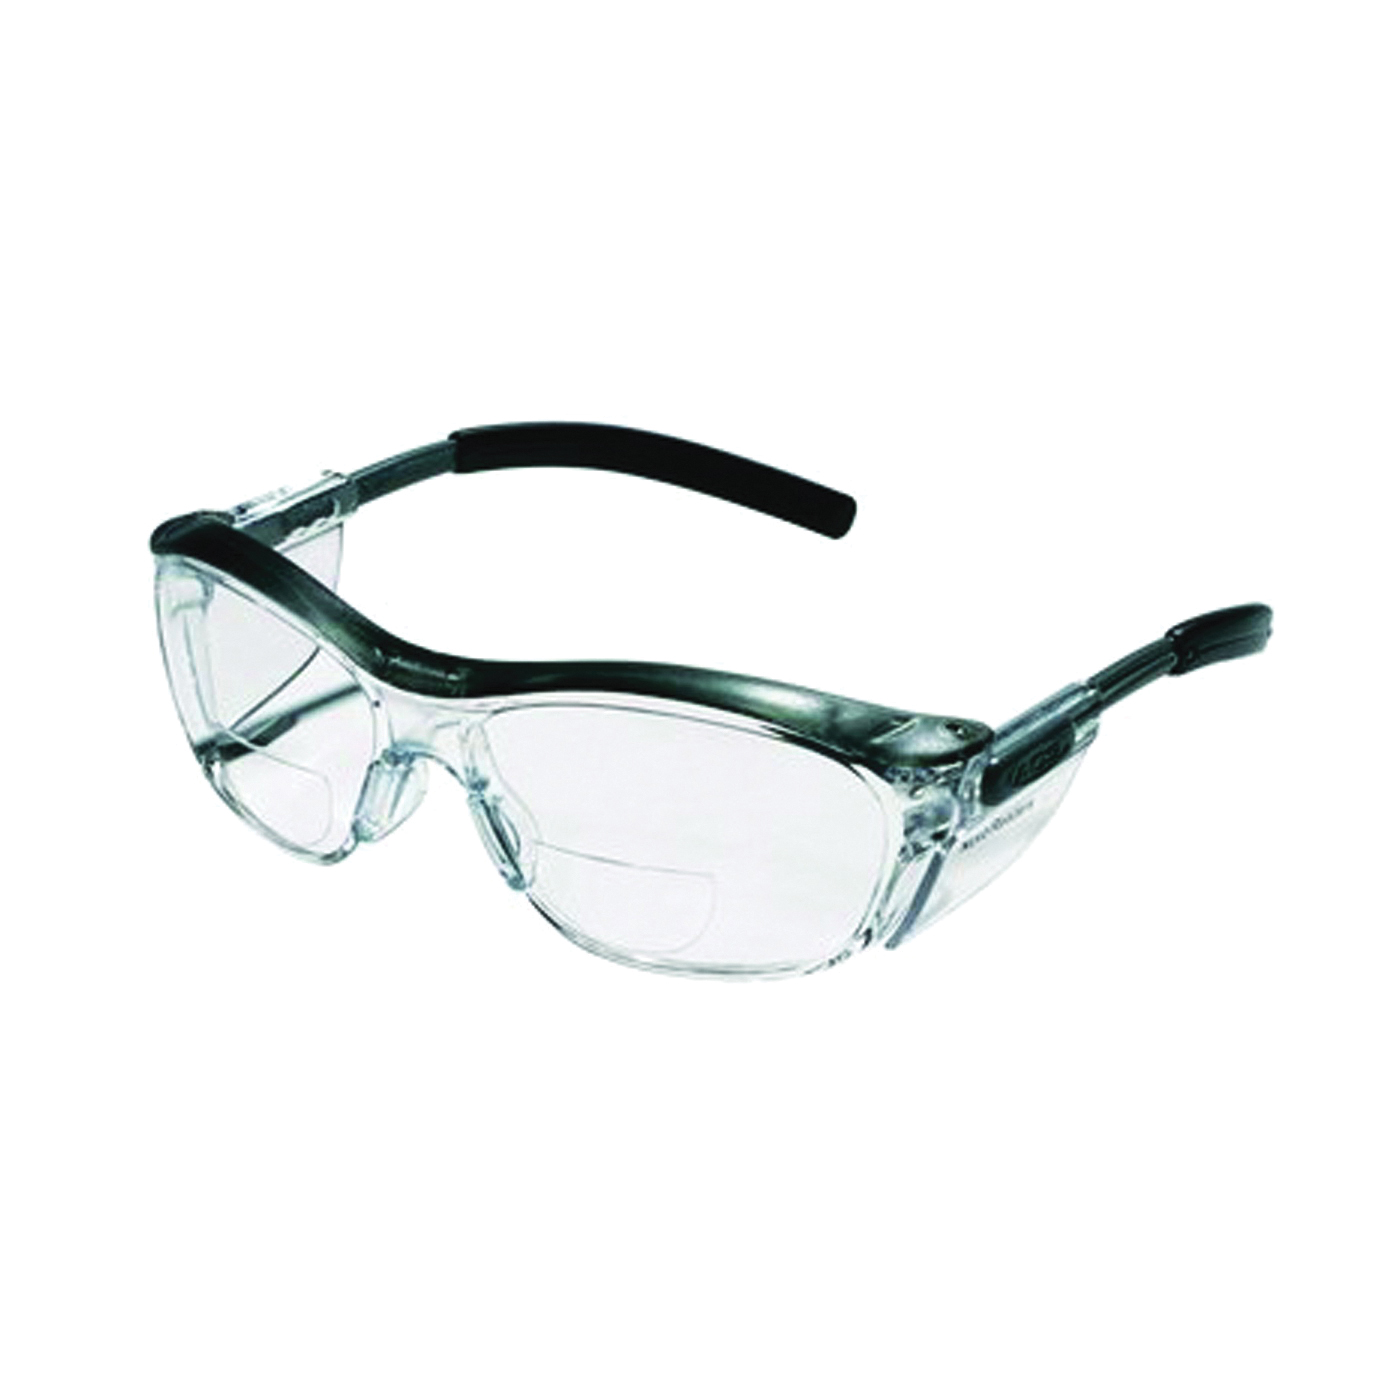 91191-00002T Readers Safety Eyewear, Anti-Fog Lens, Dual Lens Frame